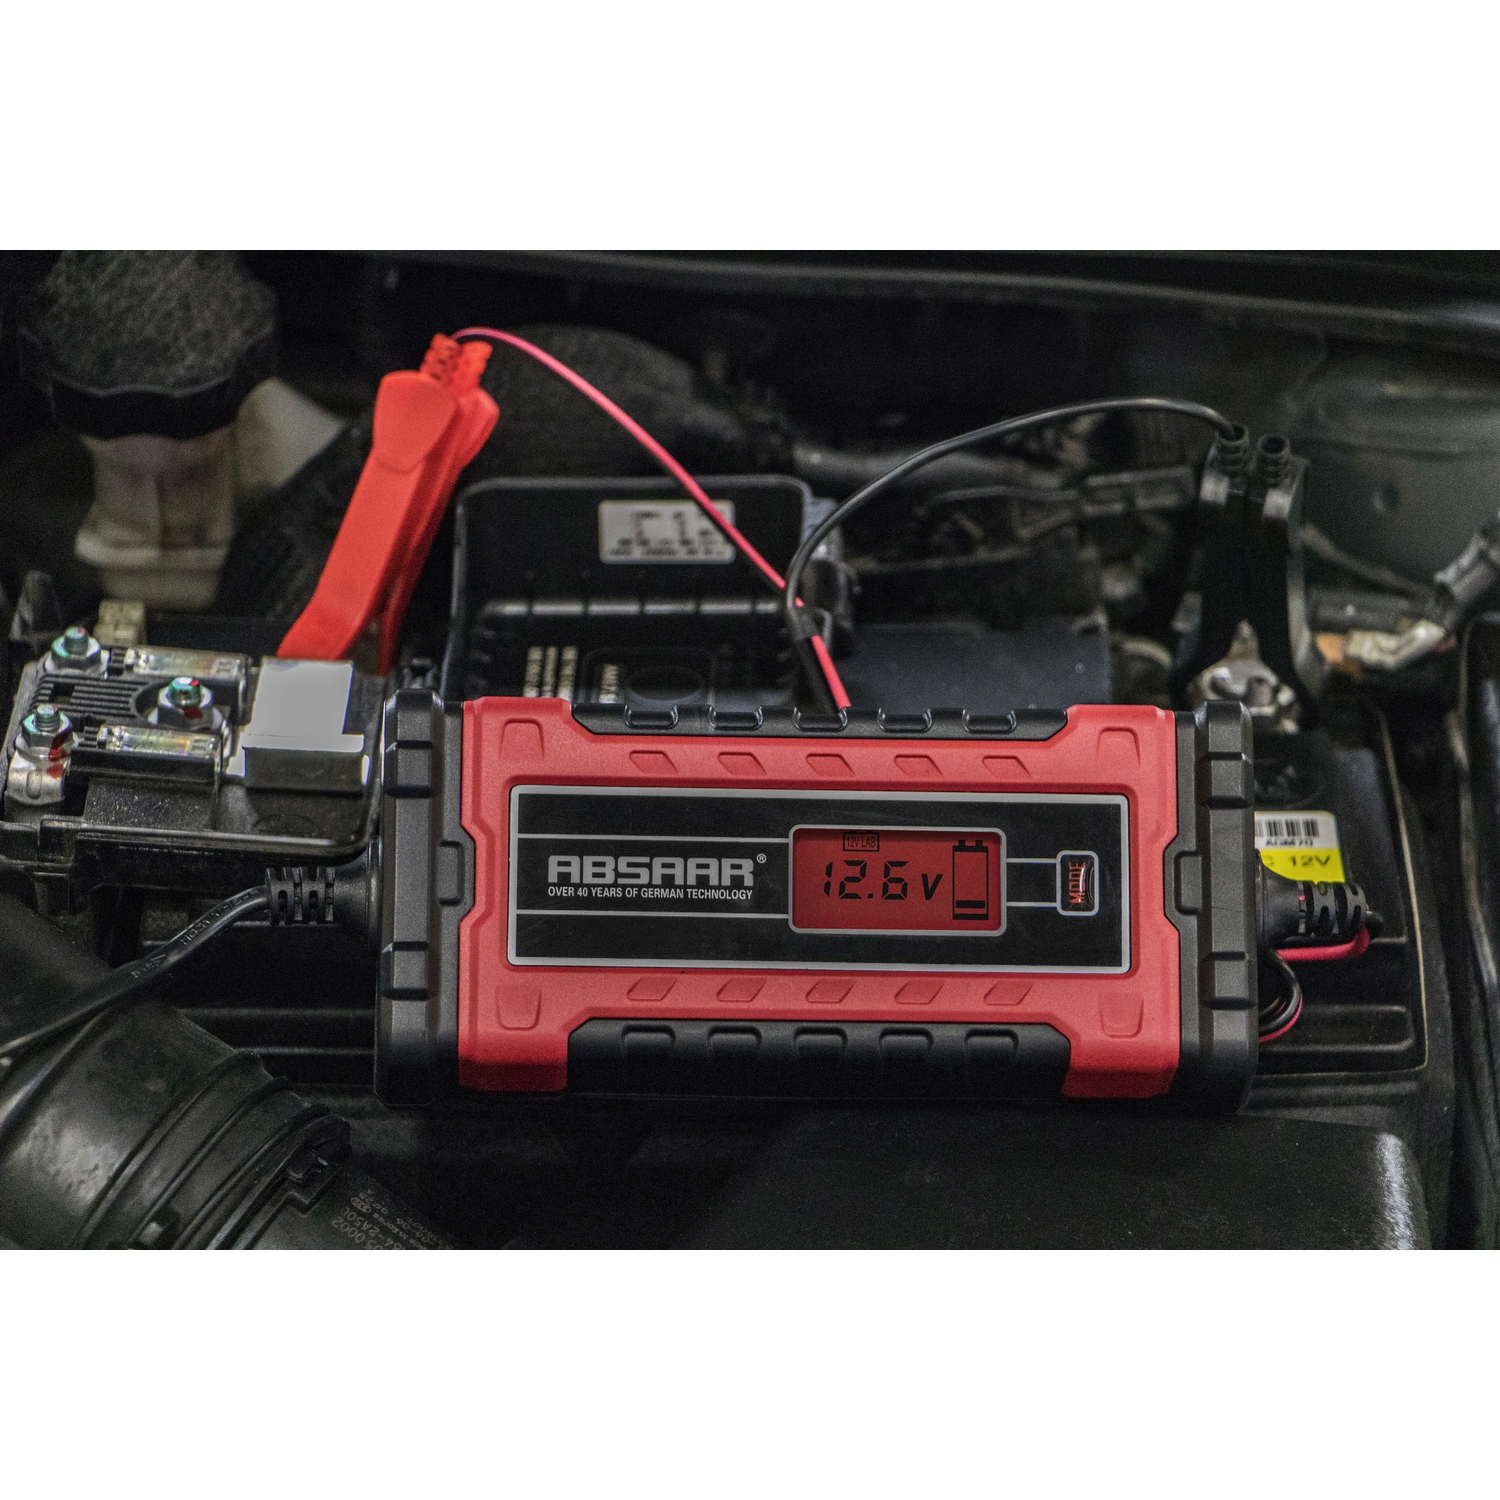 Absaar Batterieladegerät, geeignet für alle gängigen Kfz-Batterien,  Kunststoff, rot/schwarz 